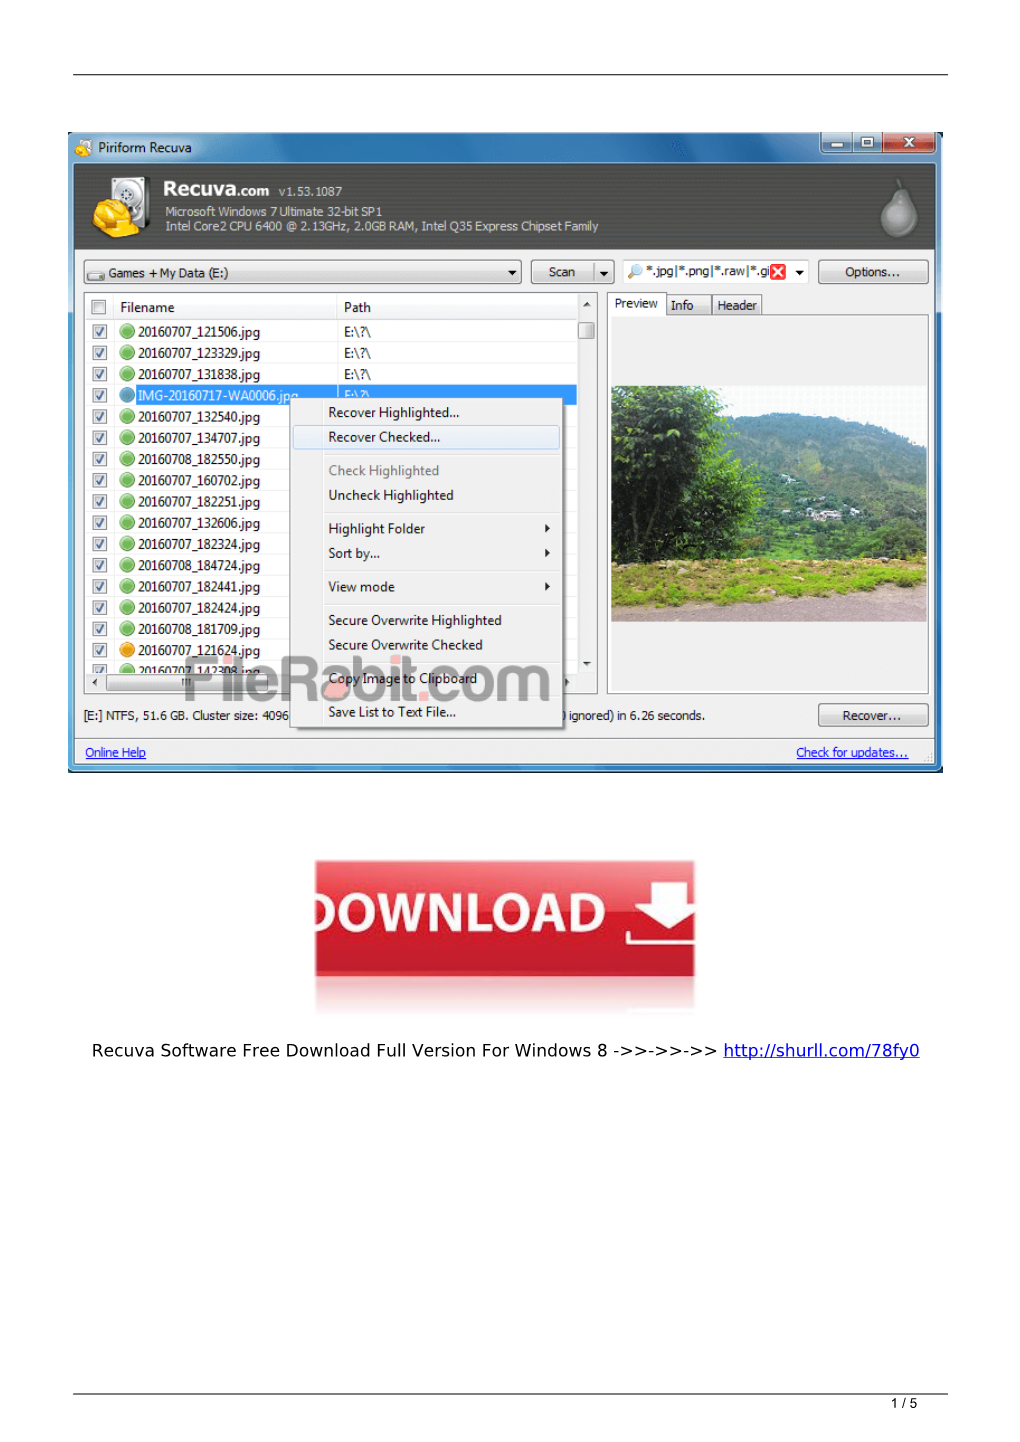 Recuva Software Free Download Full Version for Windows 8 ->>->>->>